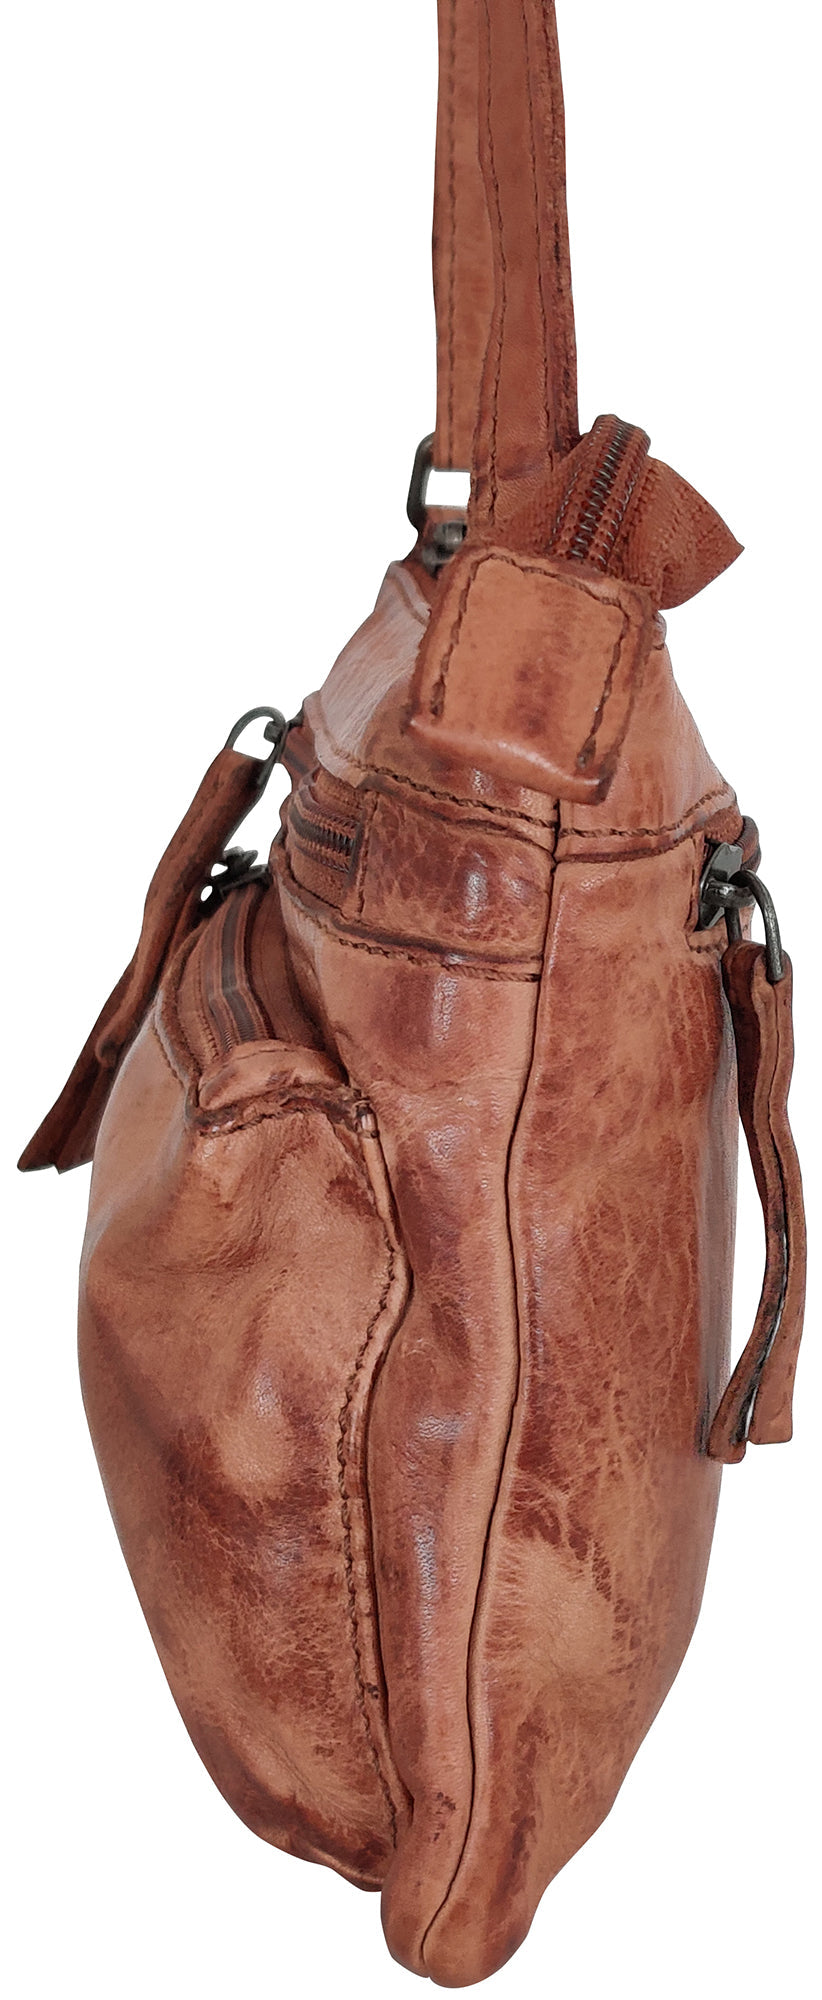 Leather Crossbody Handbag for Women, Cognac